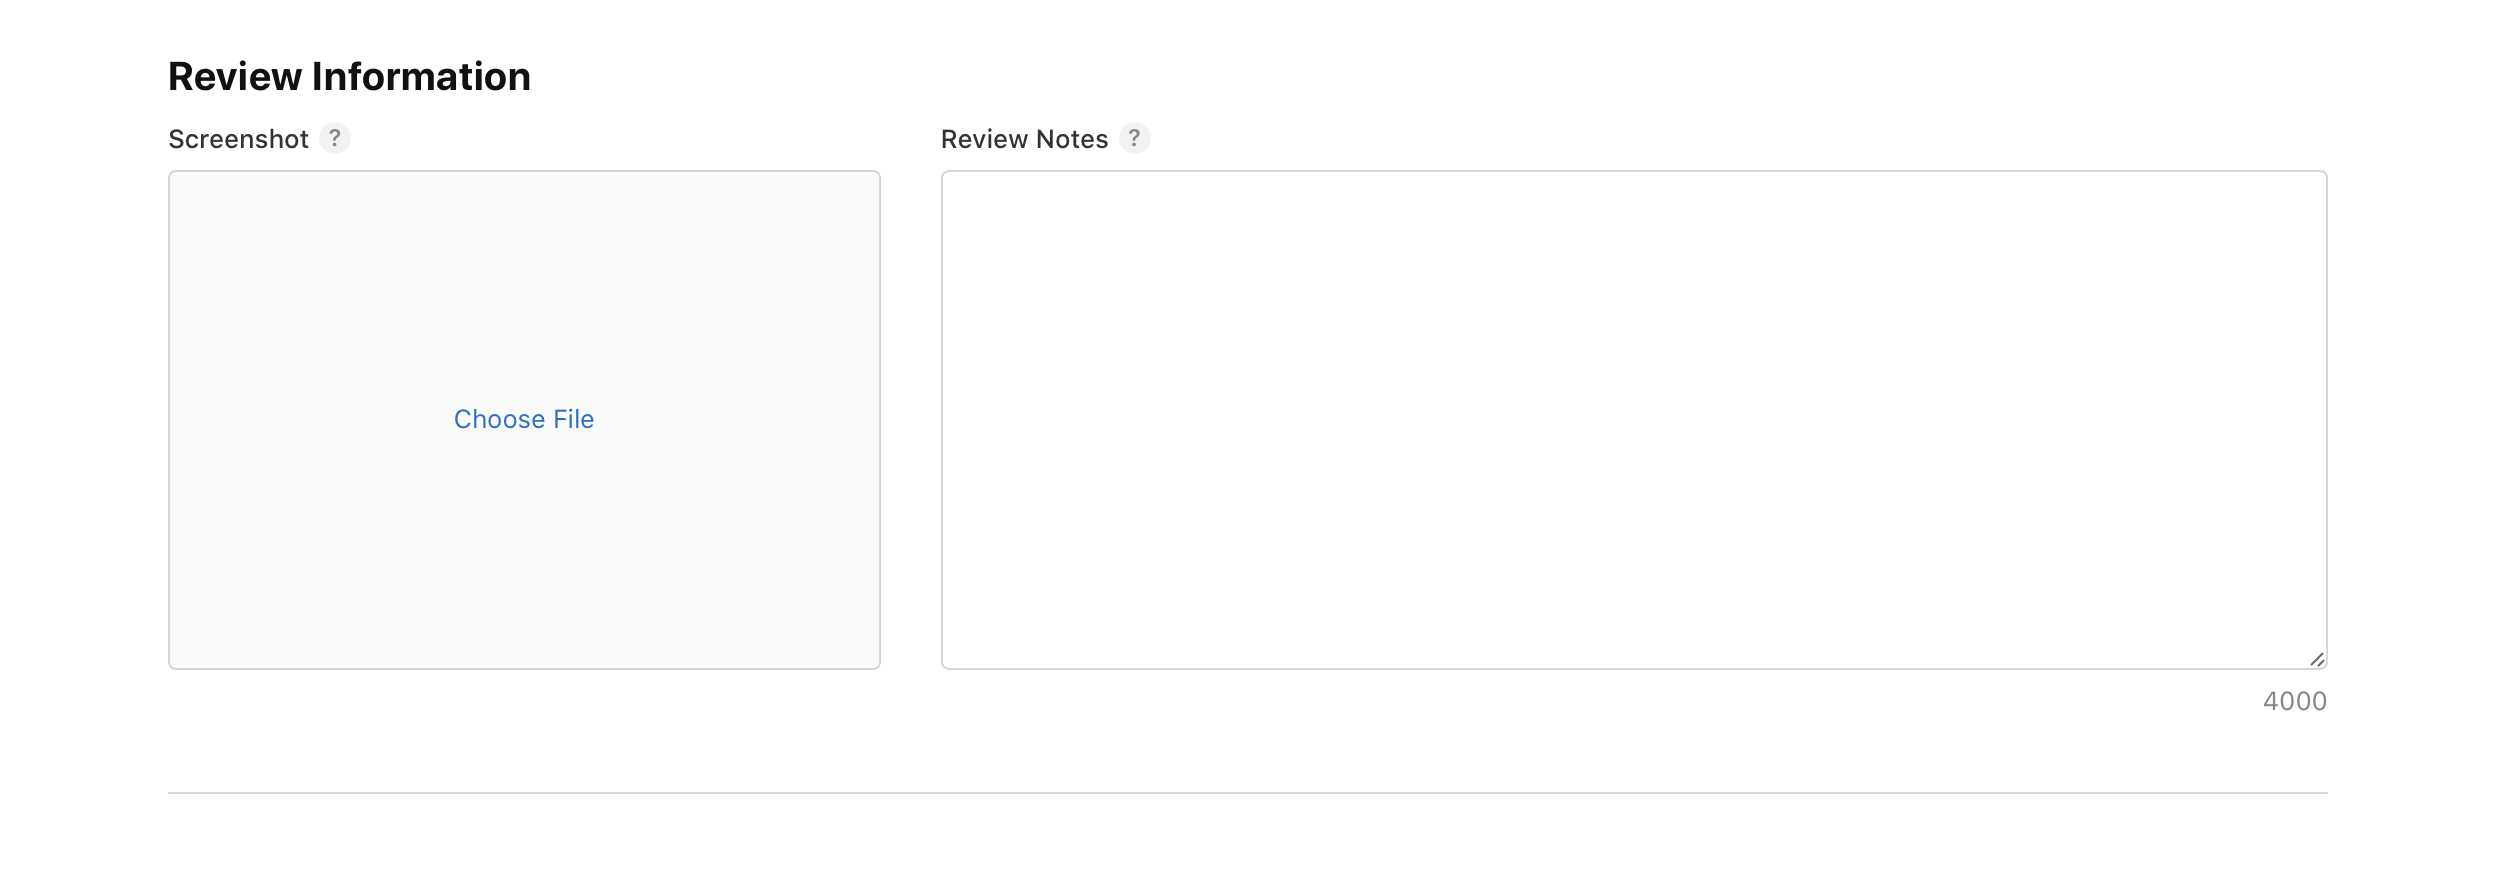 Review information screenshot